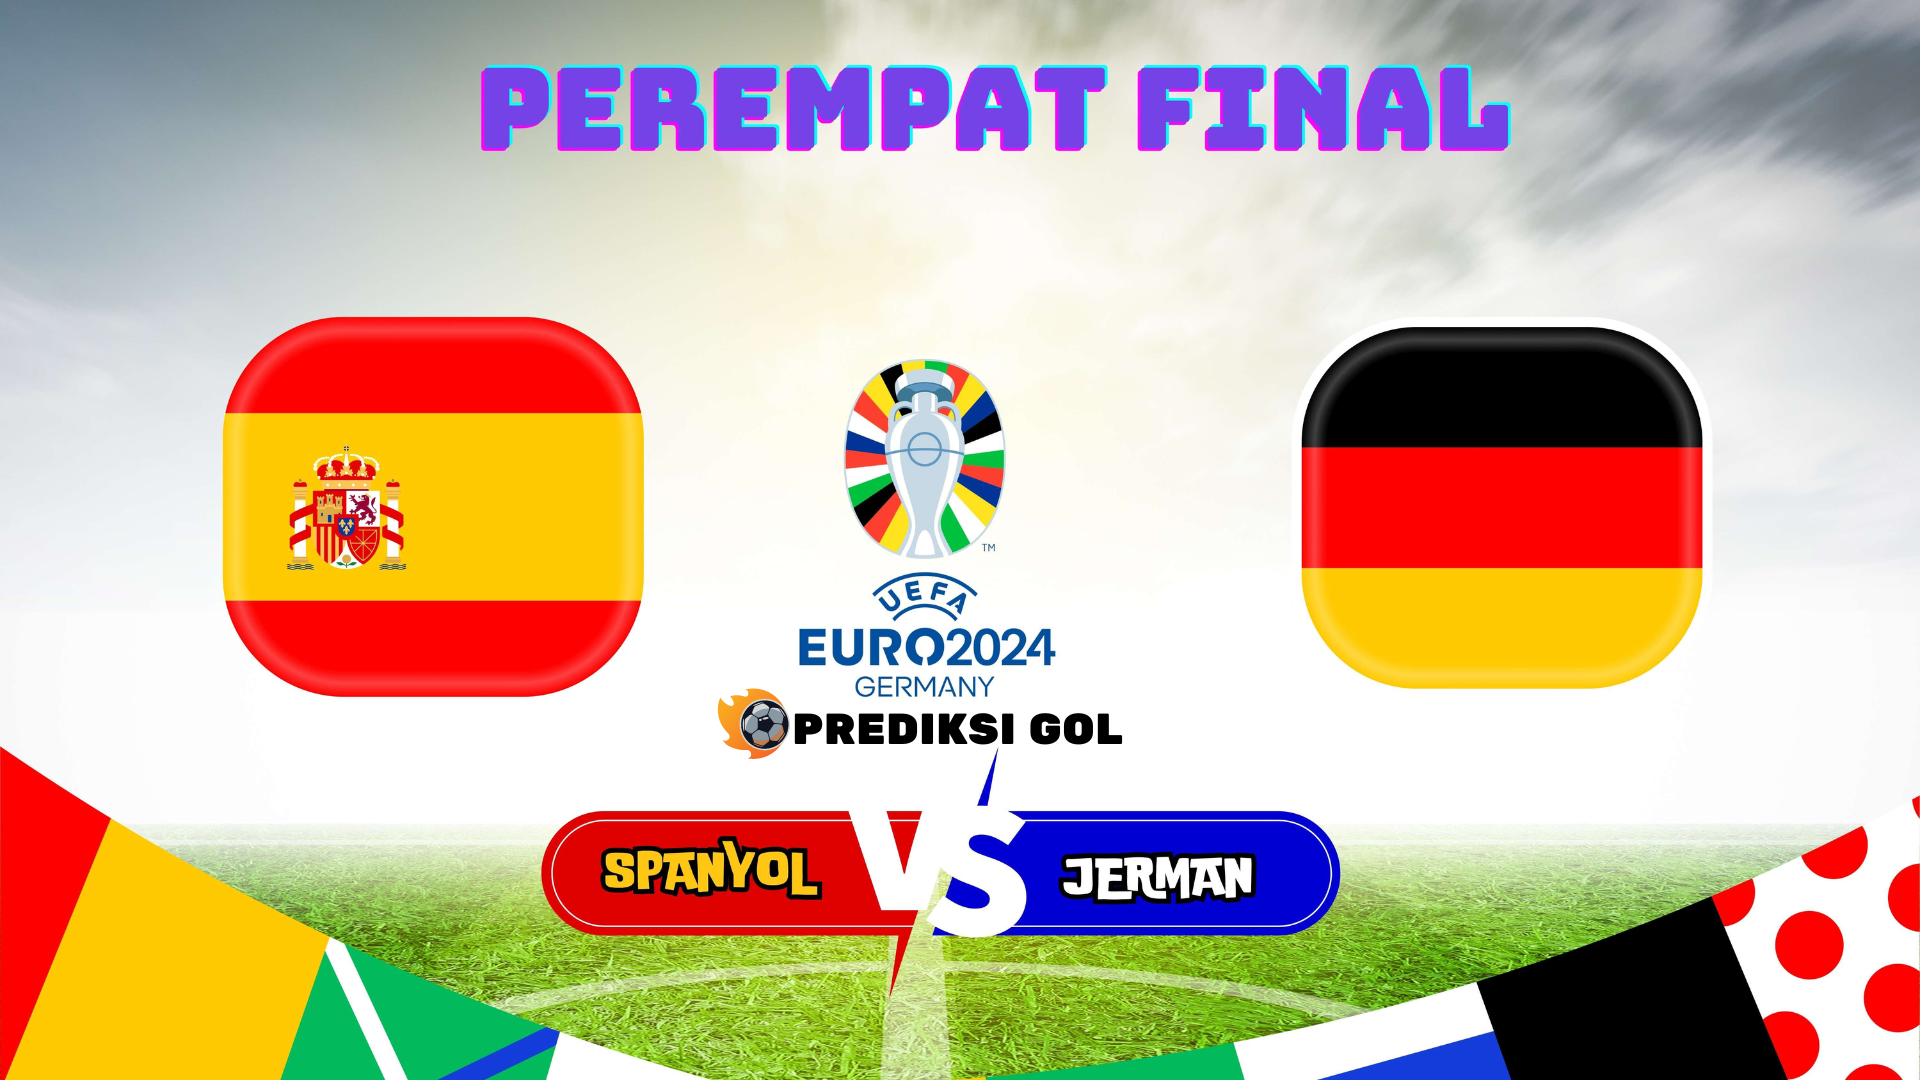 Spanyol Vs Jerman: Perempatfinal Euro 2024